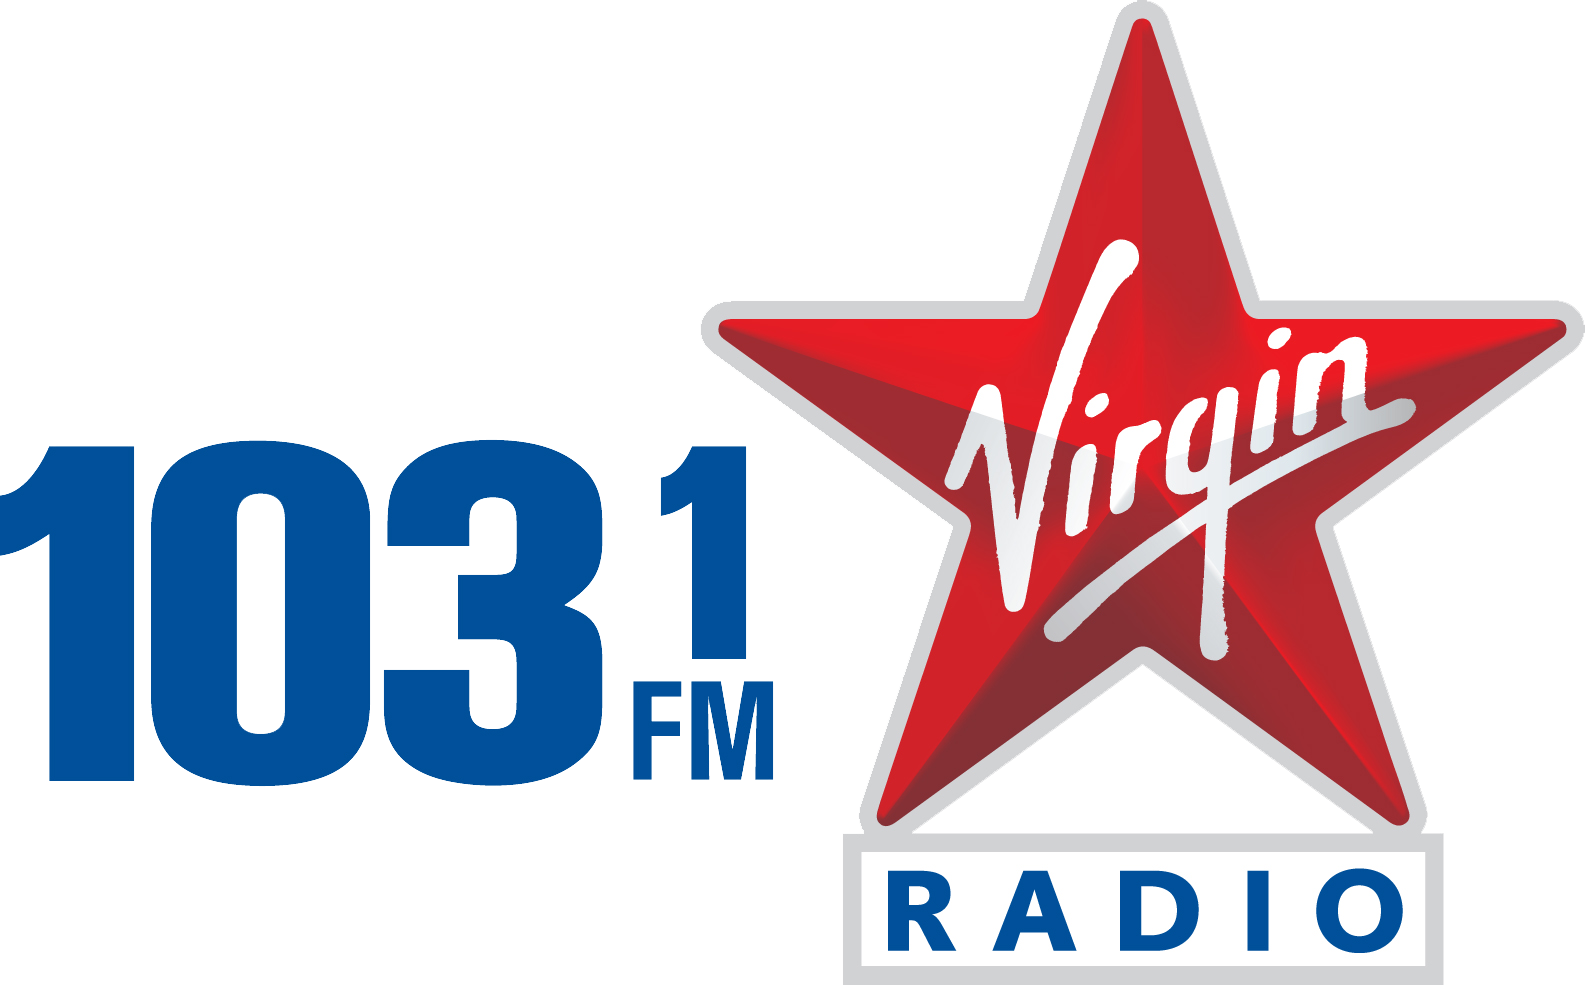 Virgin radio logo transparent